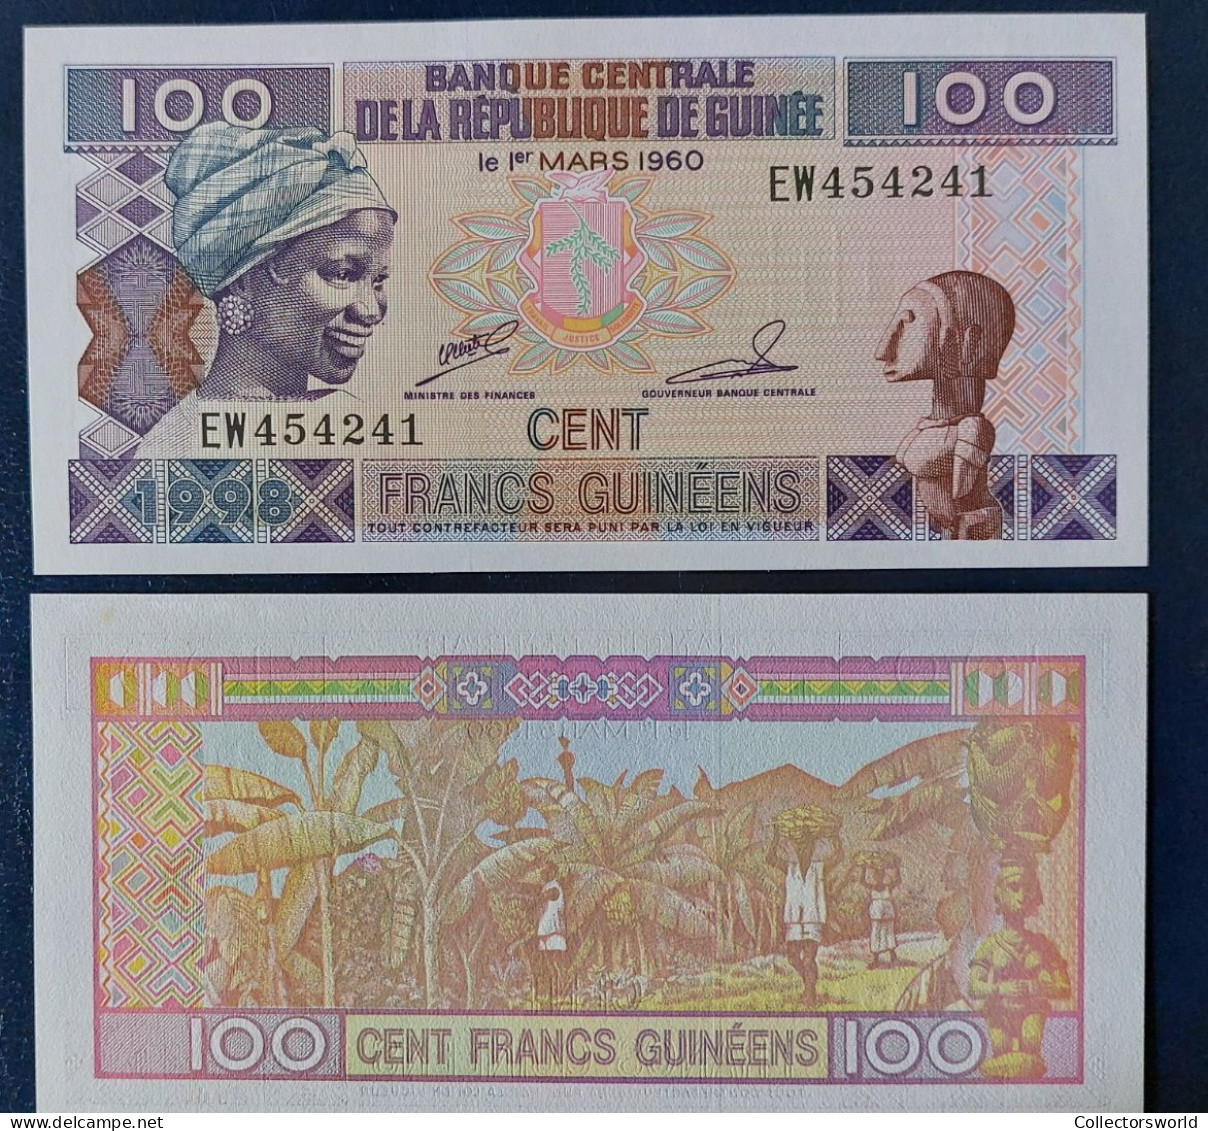 Rep Guinee Guinea 100 Francs Year 2012 P35b UNC - Guinea